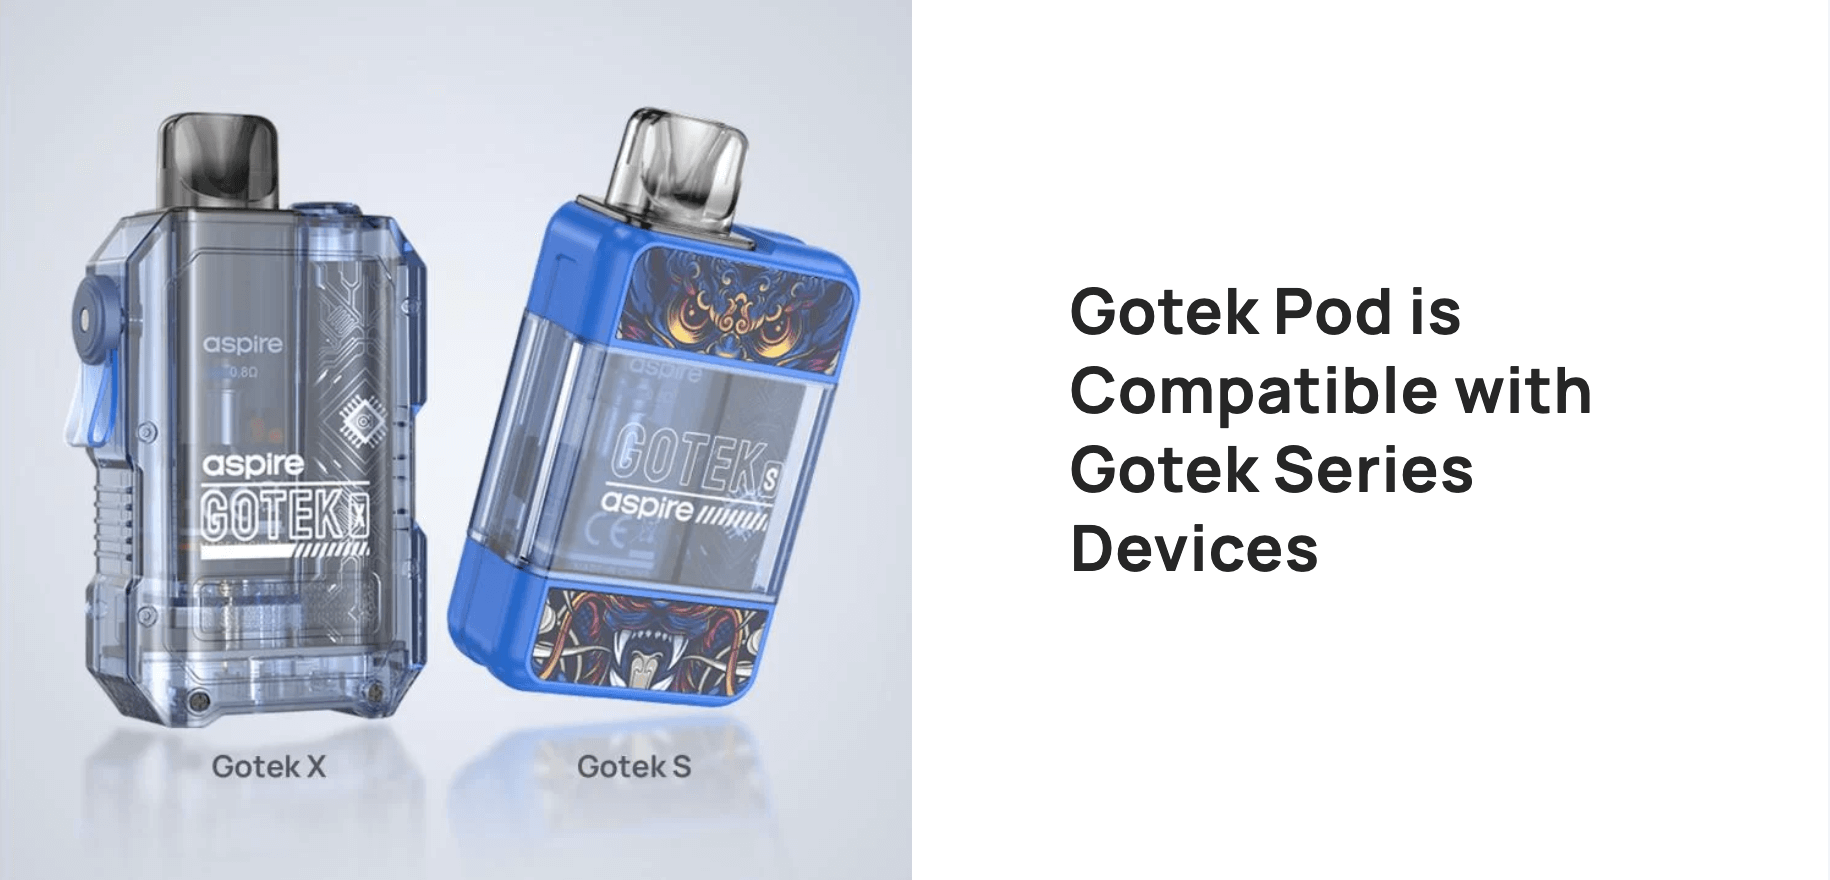 Gotek Pod is Compatible with Gotek Series Devices